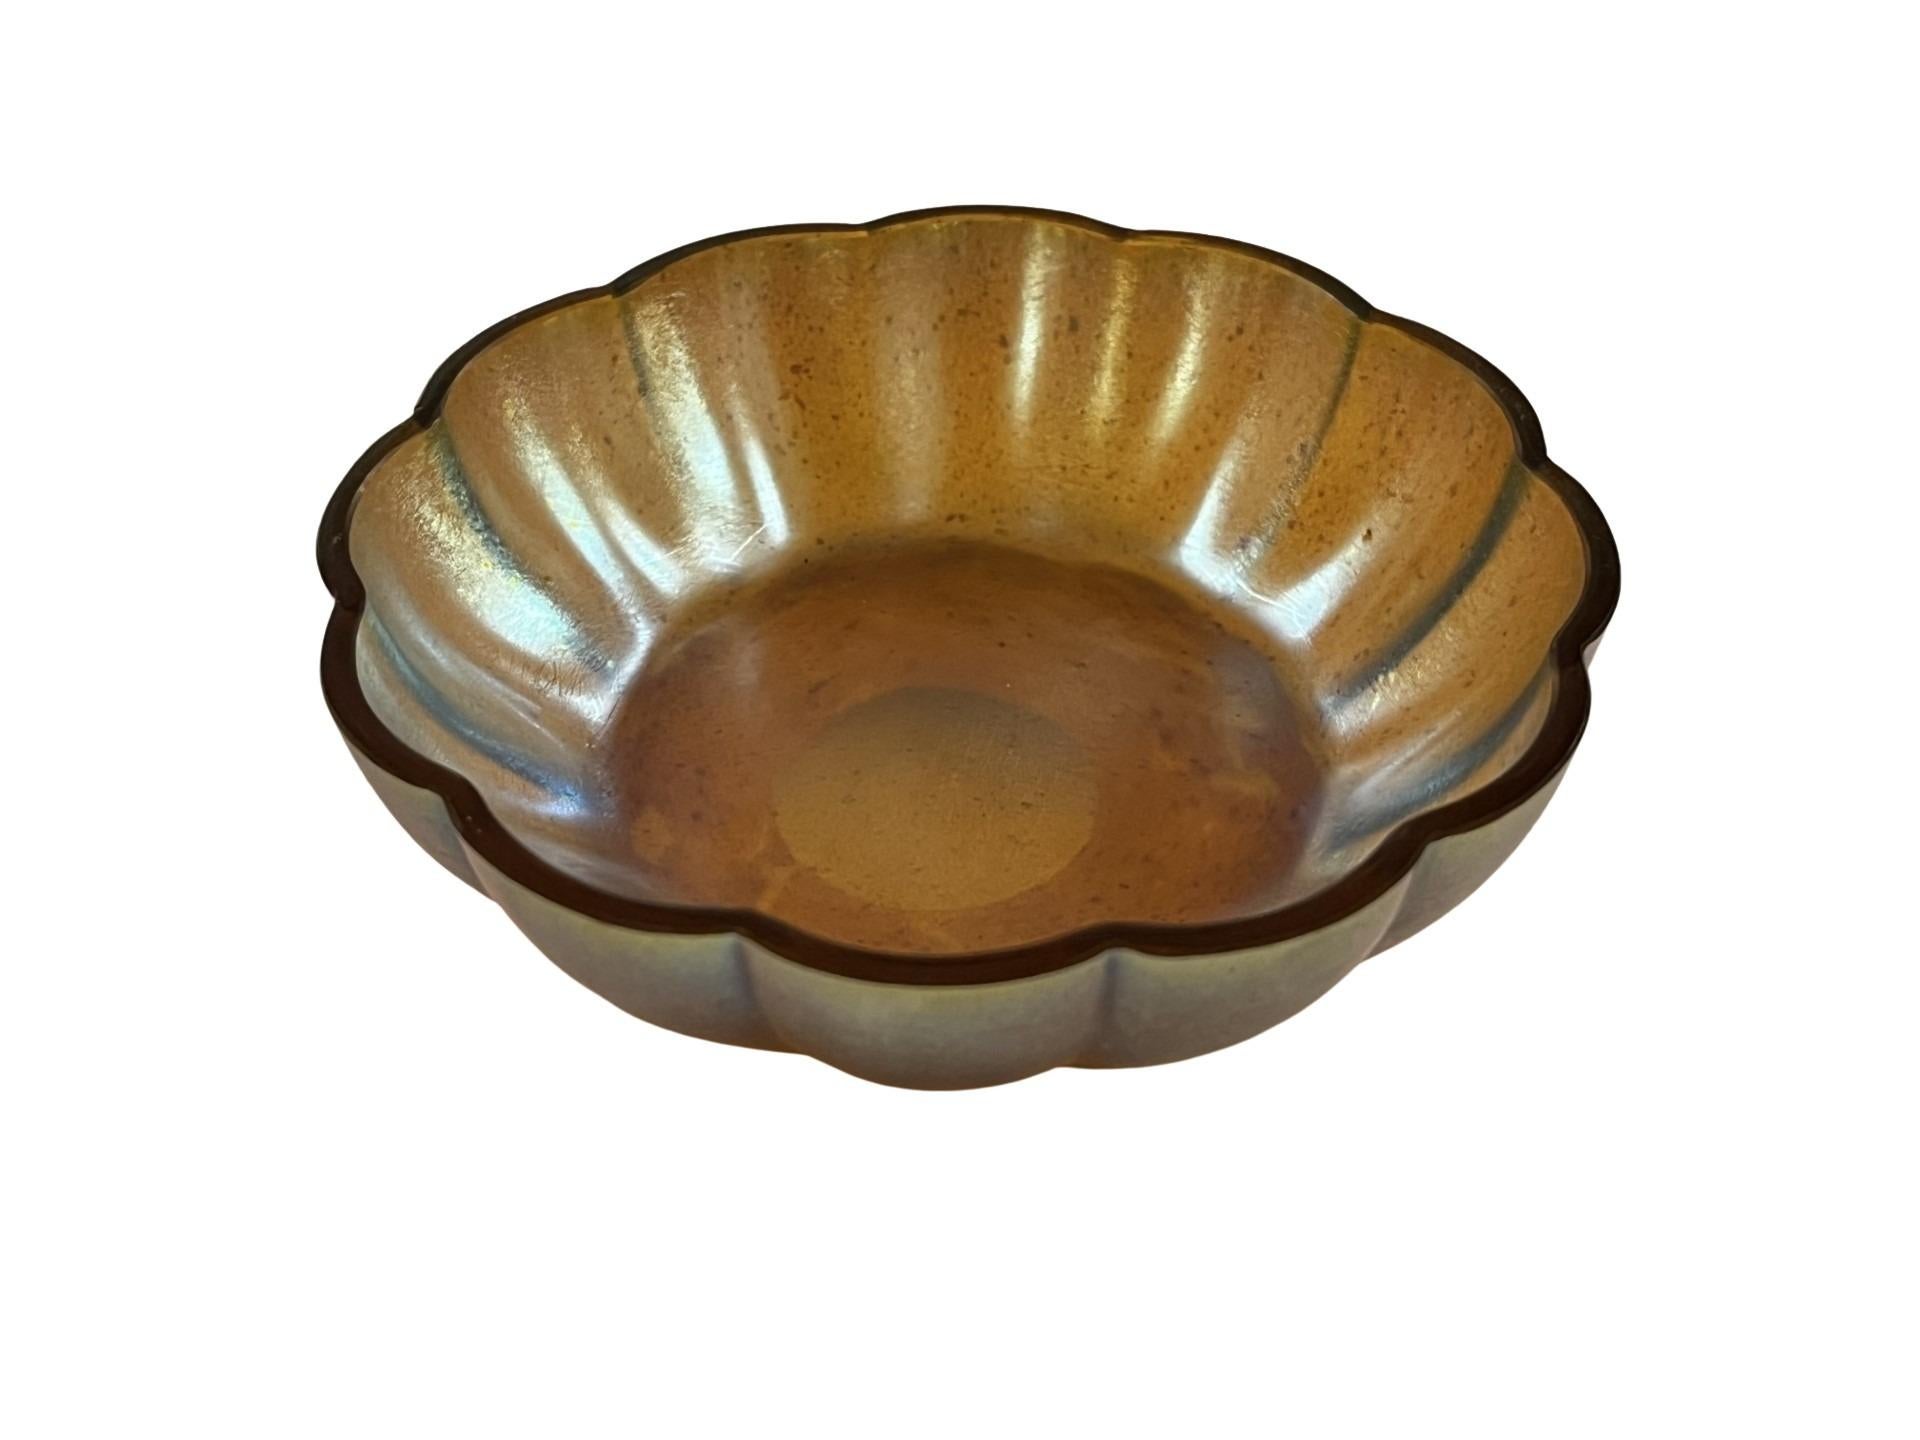 Fascinating bowl, iridiscent, WMF Myra glass, Lötz like, 1920s Art Deco Germany 4